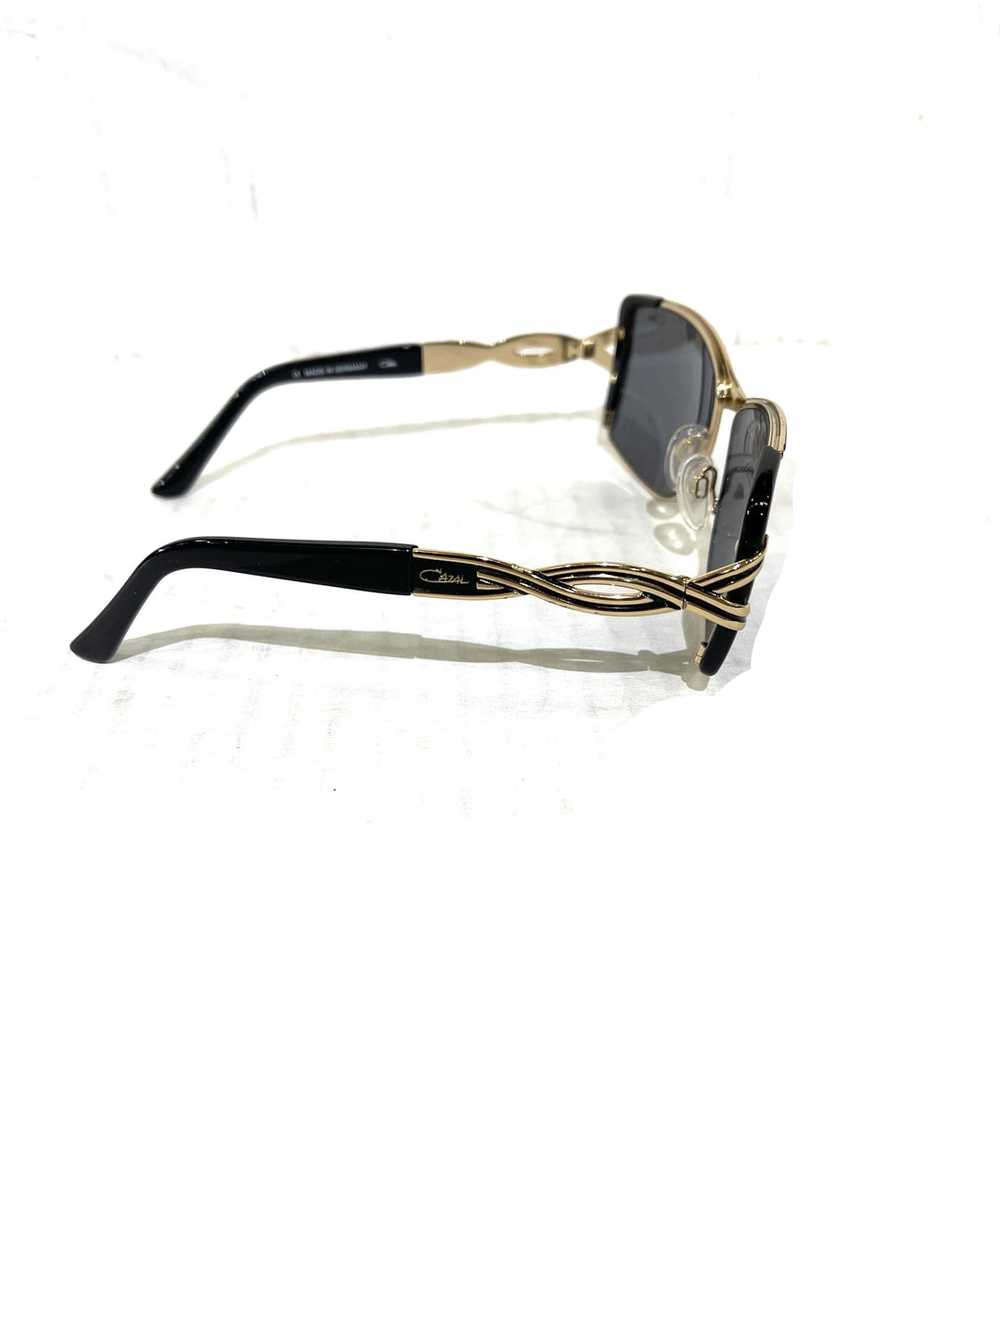 Cazal Black and Gold Sunglasses - image 2